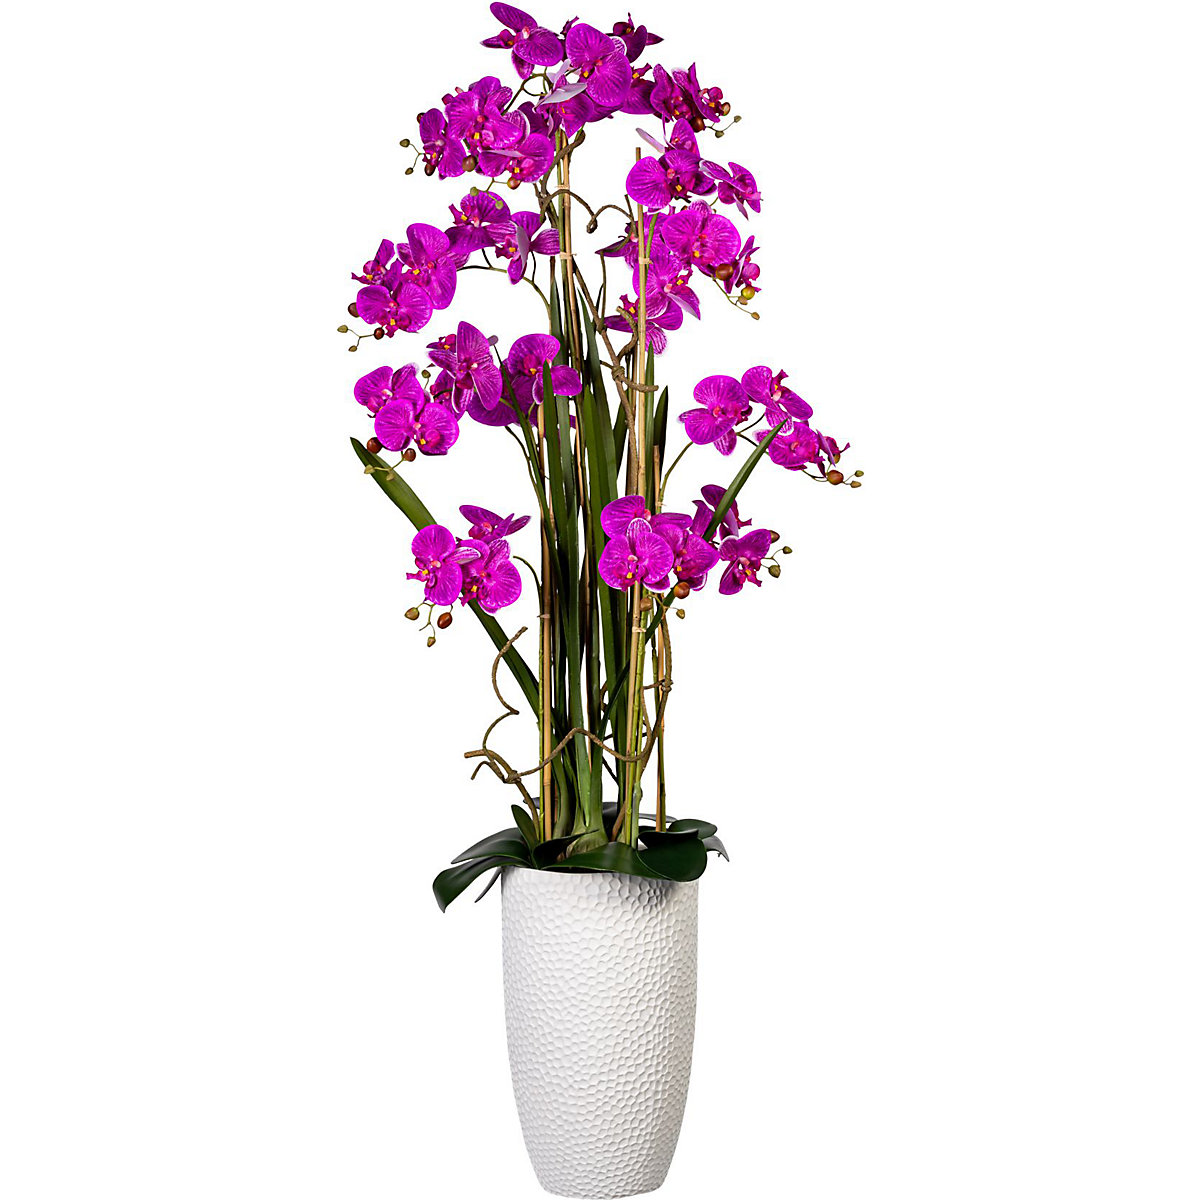 Arranjo de orquídeas, em vaso cerâmico, altura aprox. 1600 mm, flores em lilás